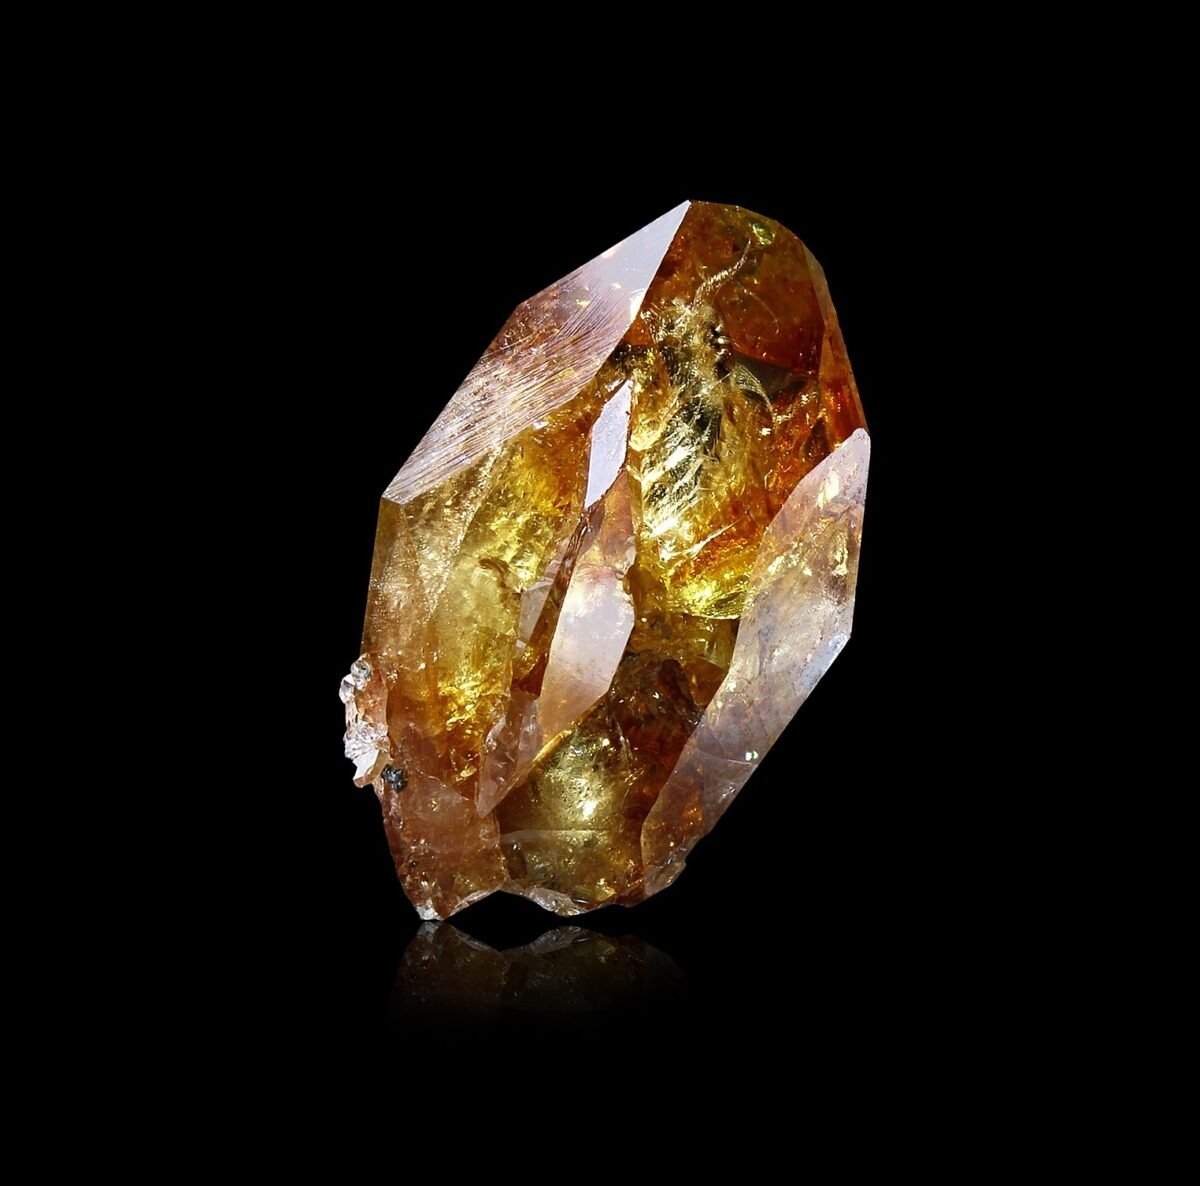 Titanite from Kristallwand, Austria